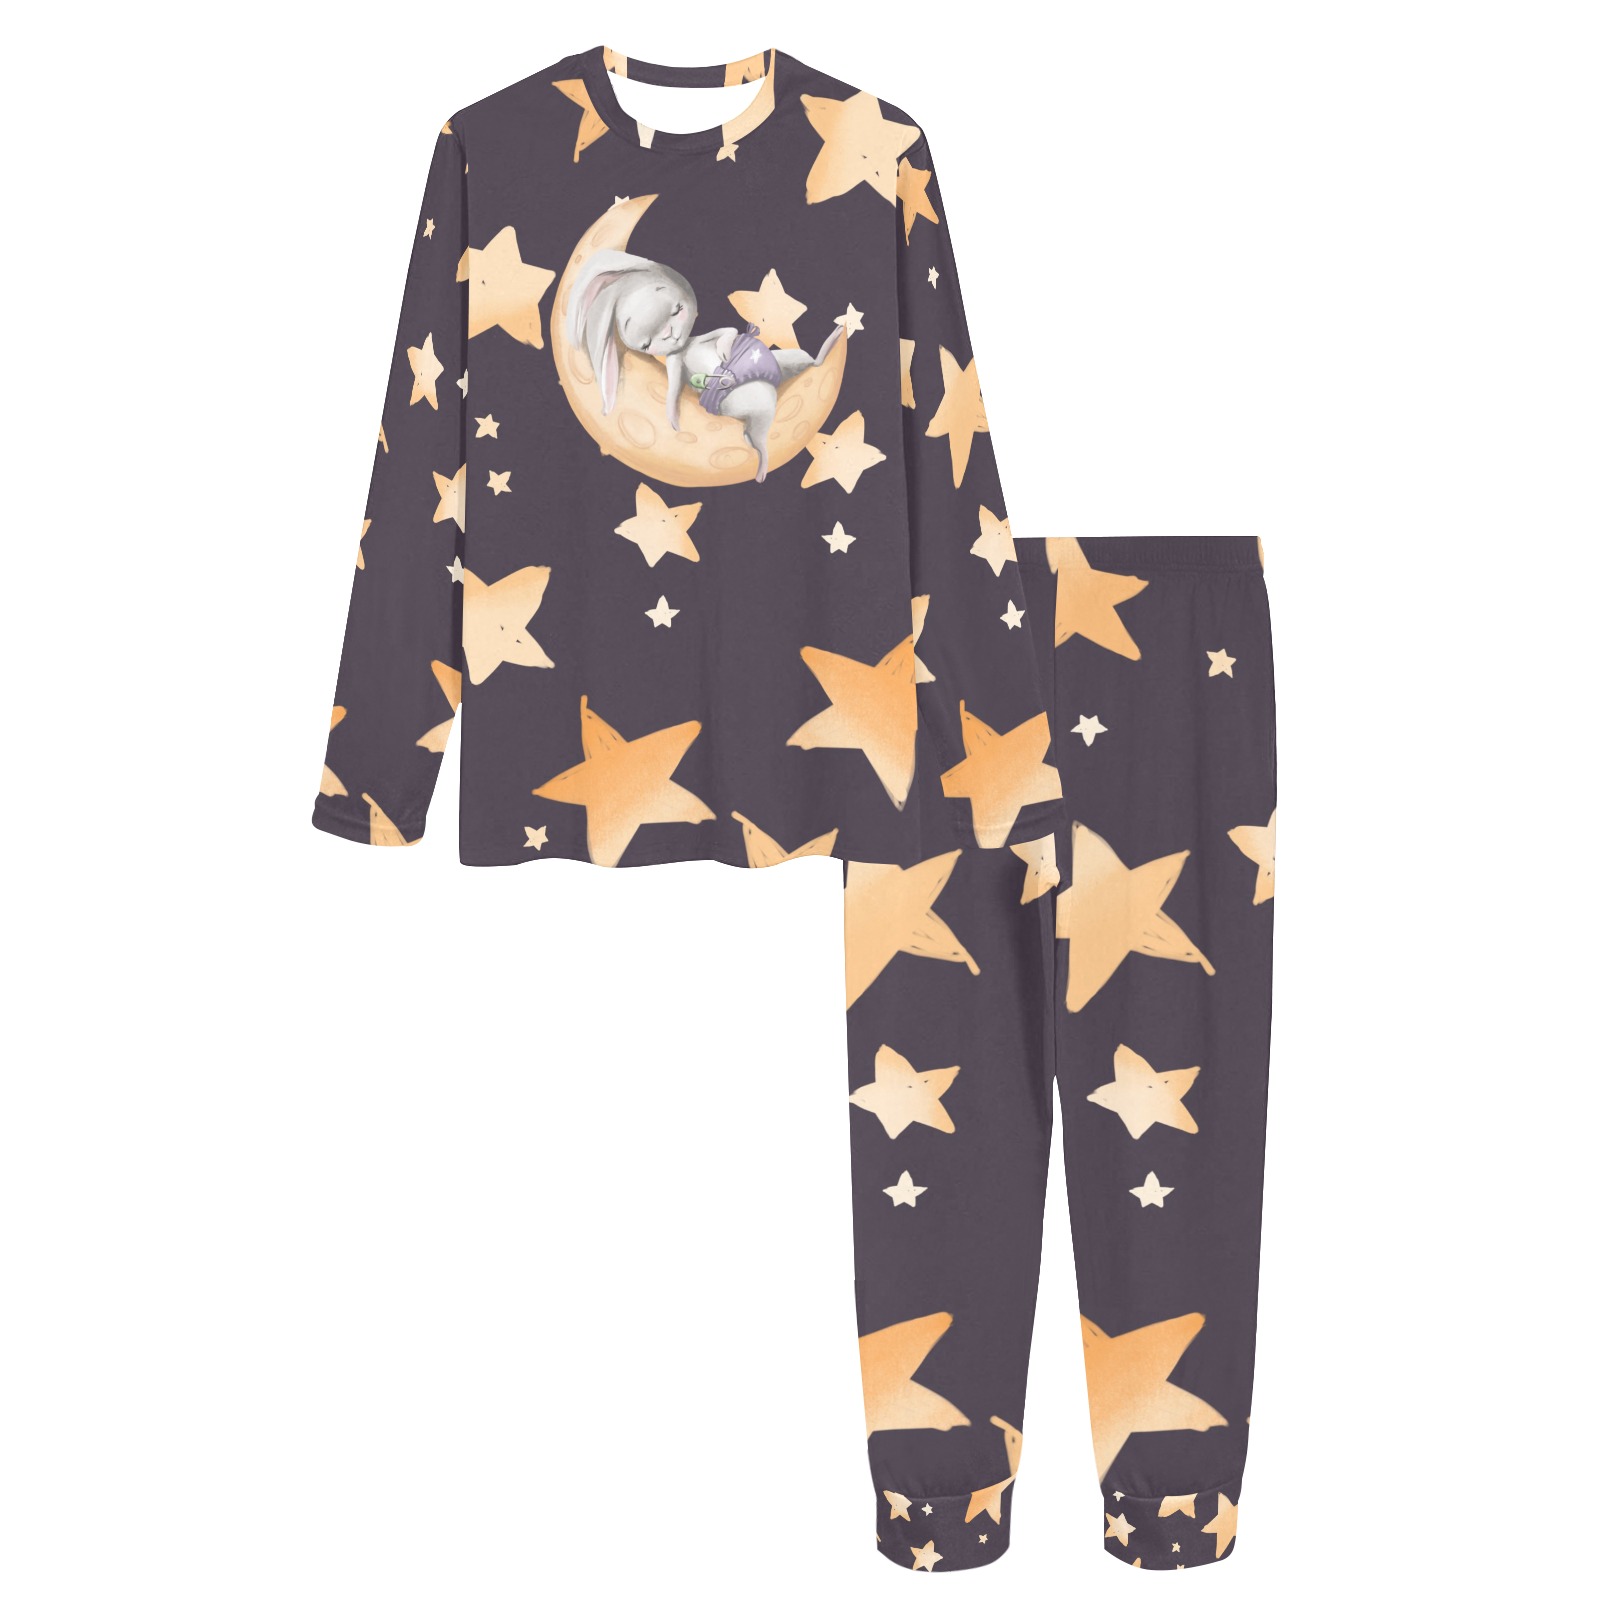 Sleeping Bunny Women's All Over Print Pajama Set